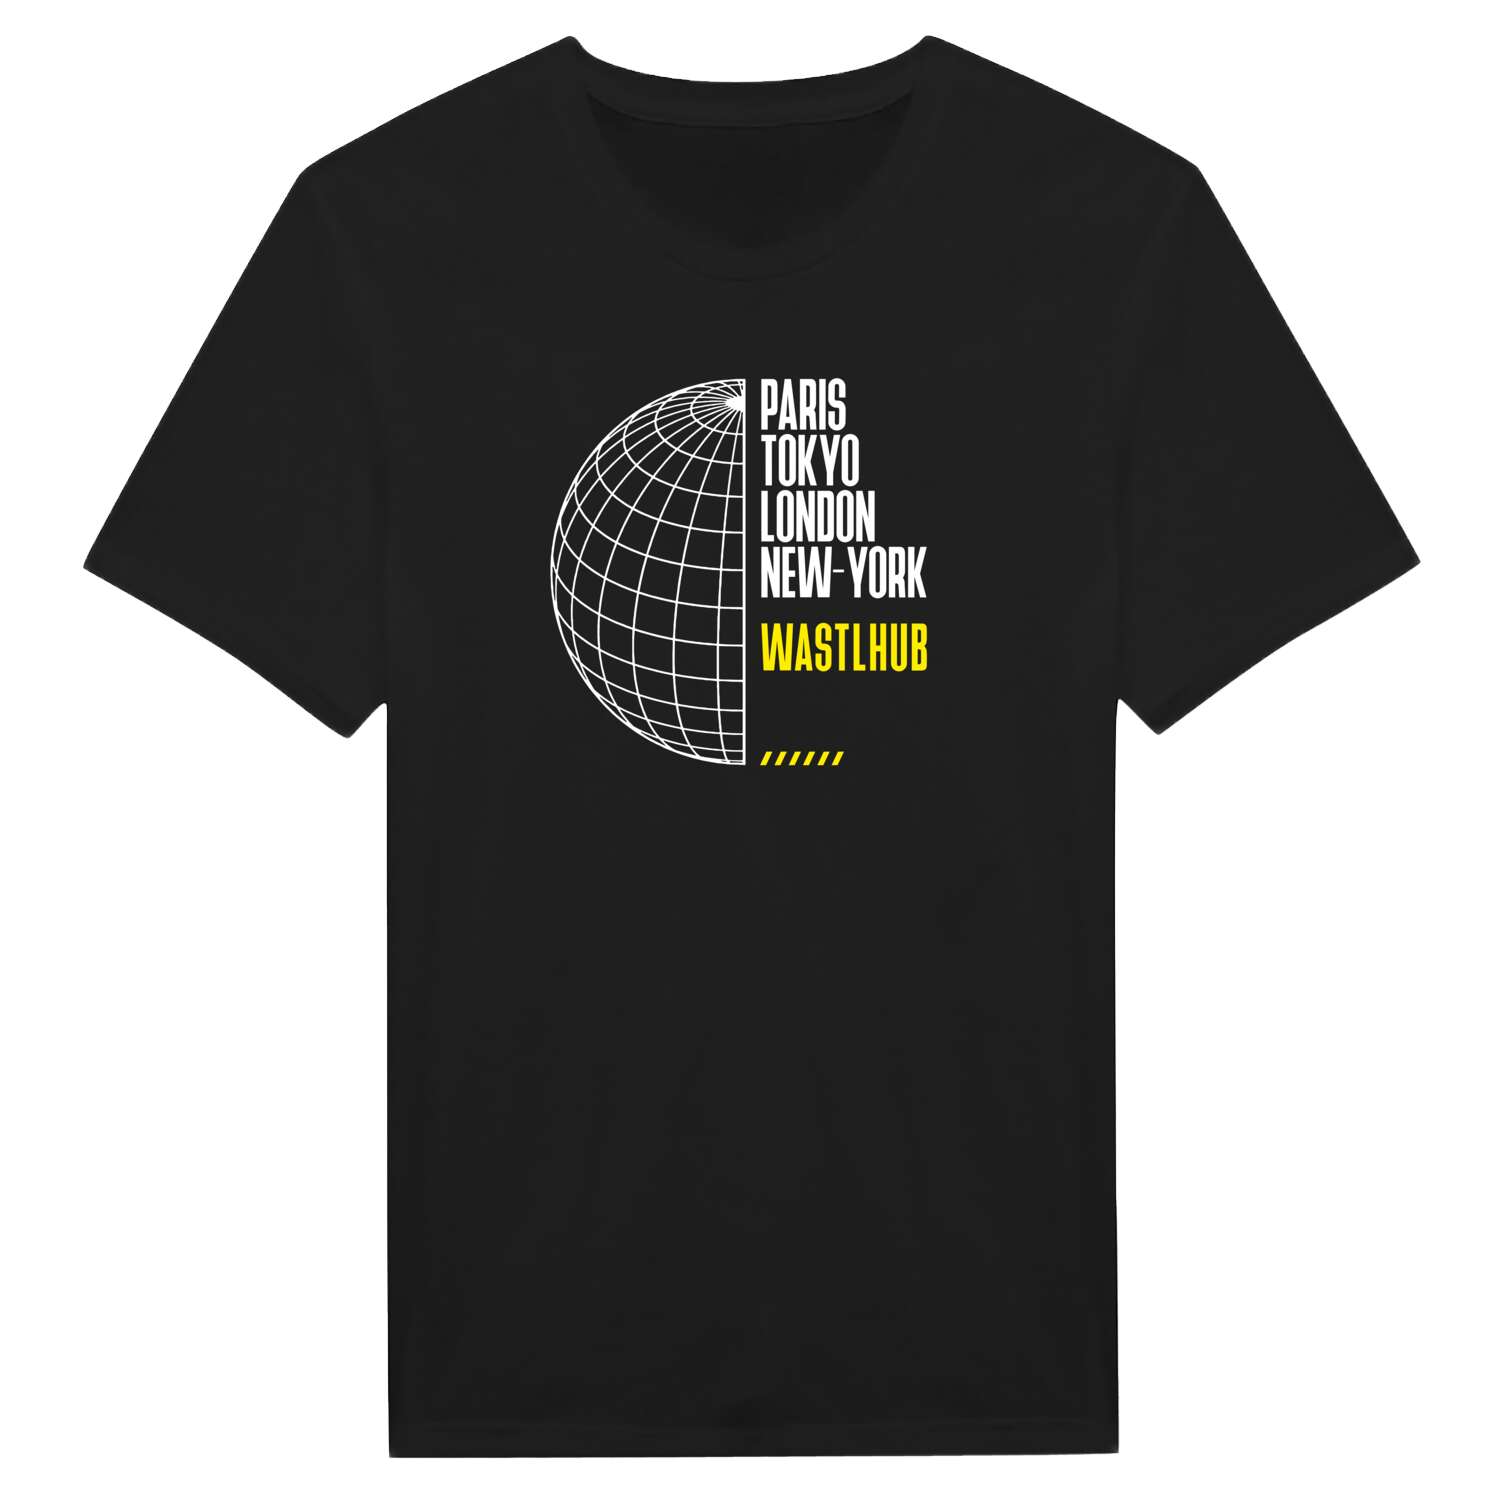 Wastlhub T-Shirt »Paris Tokyo London«